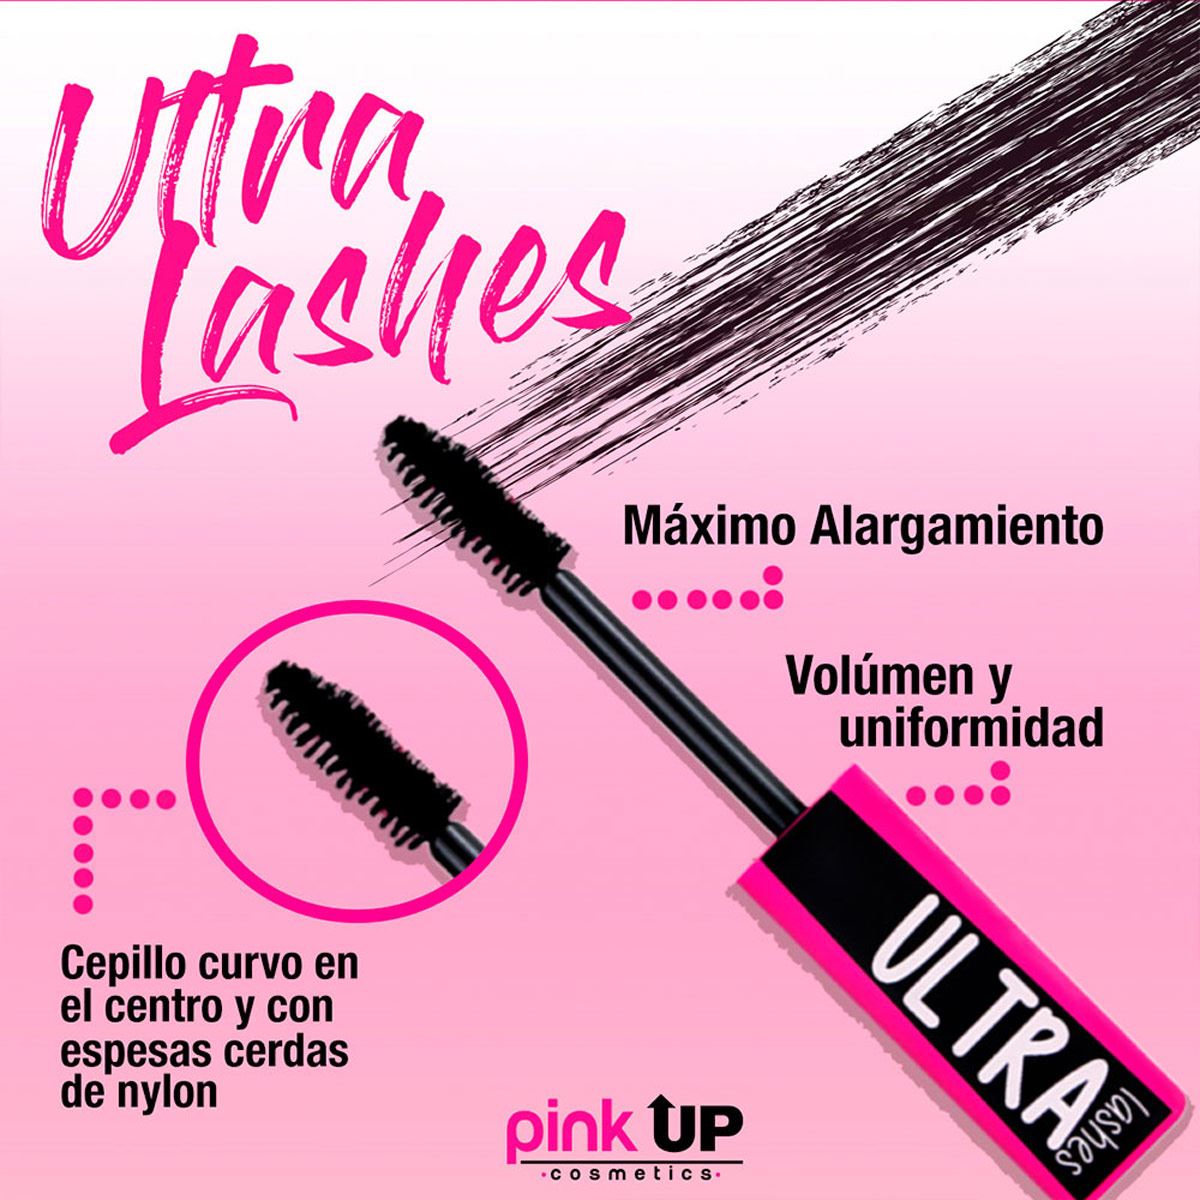 Mascara Pink Up Ultra Lashes